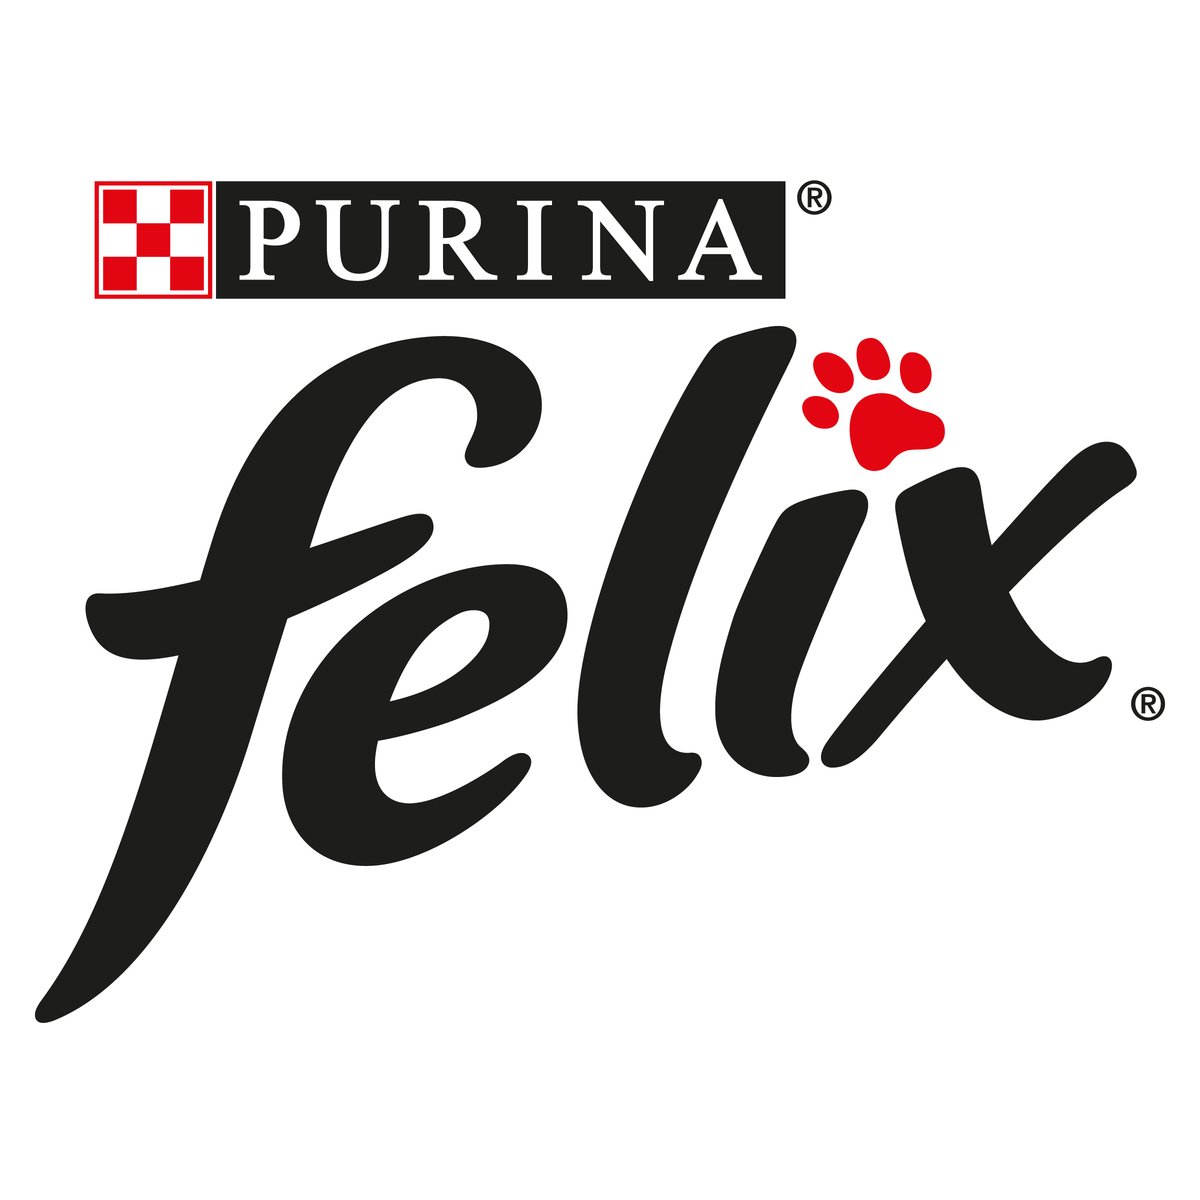 Felix As Good as it Looks Tuna in Jelly Wet Cat Food 100 g